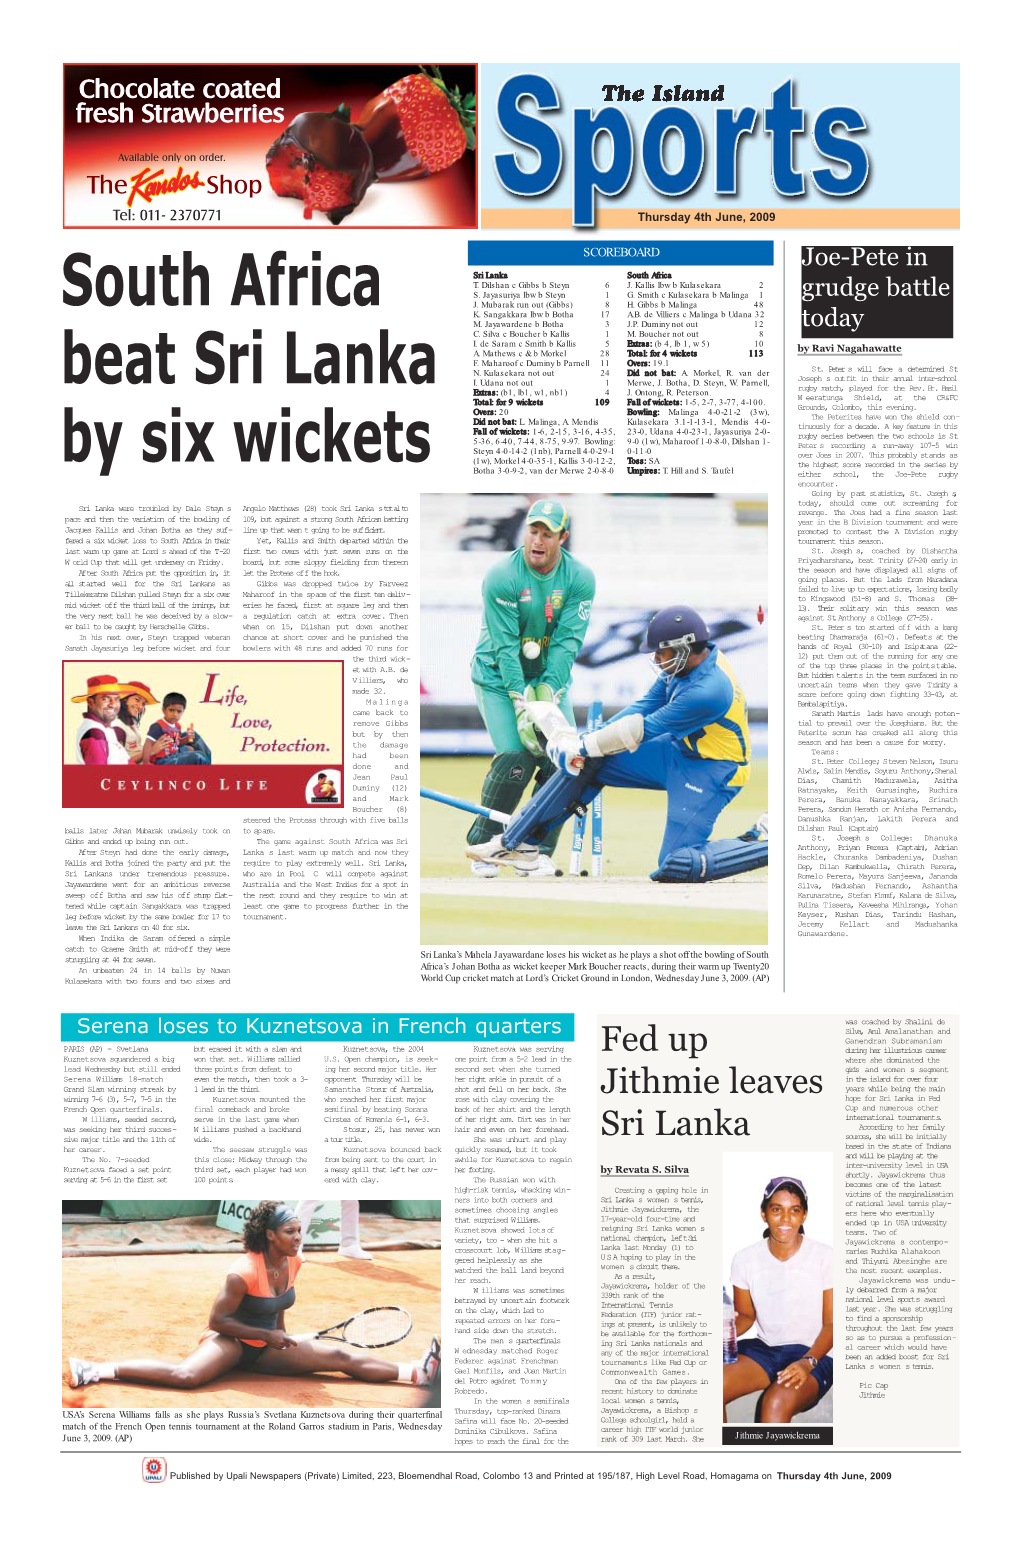 Fed up Jithmie Leaves Sri Lanka